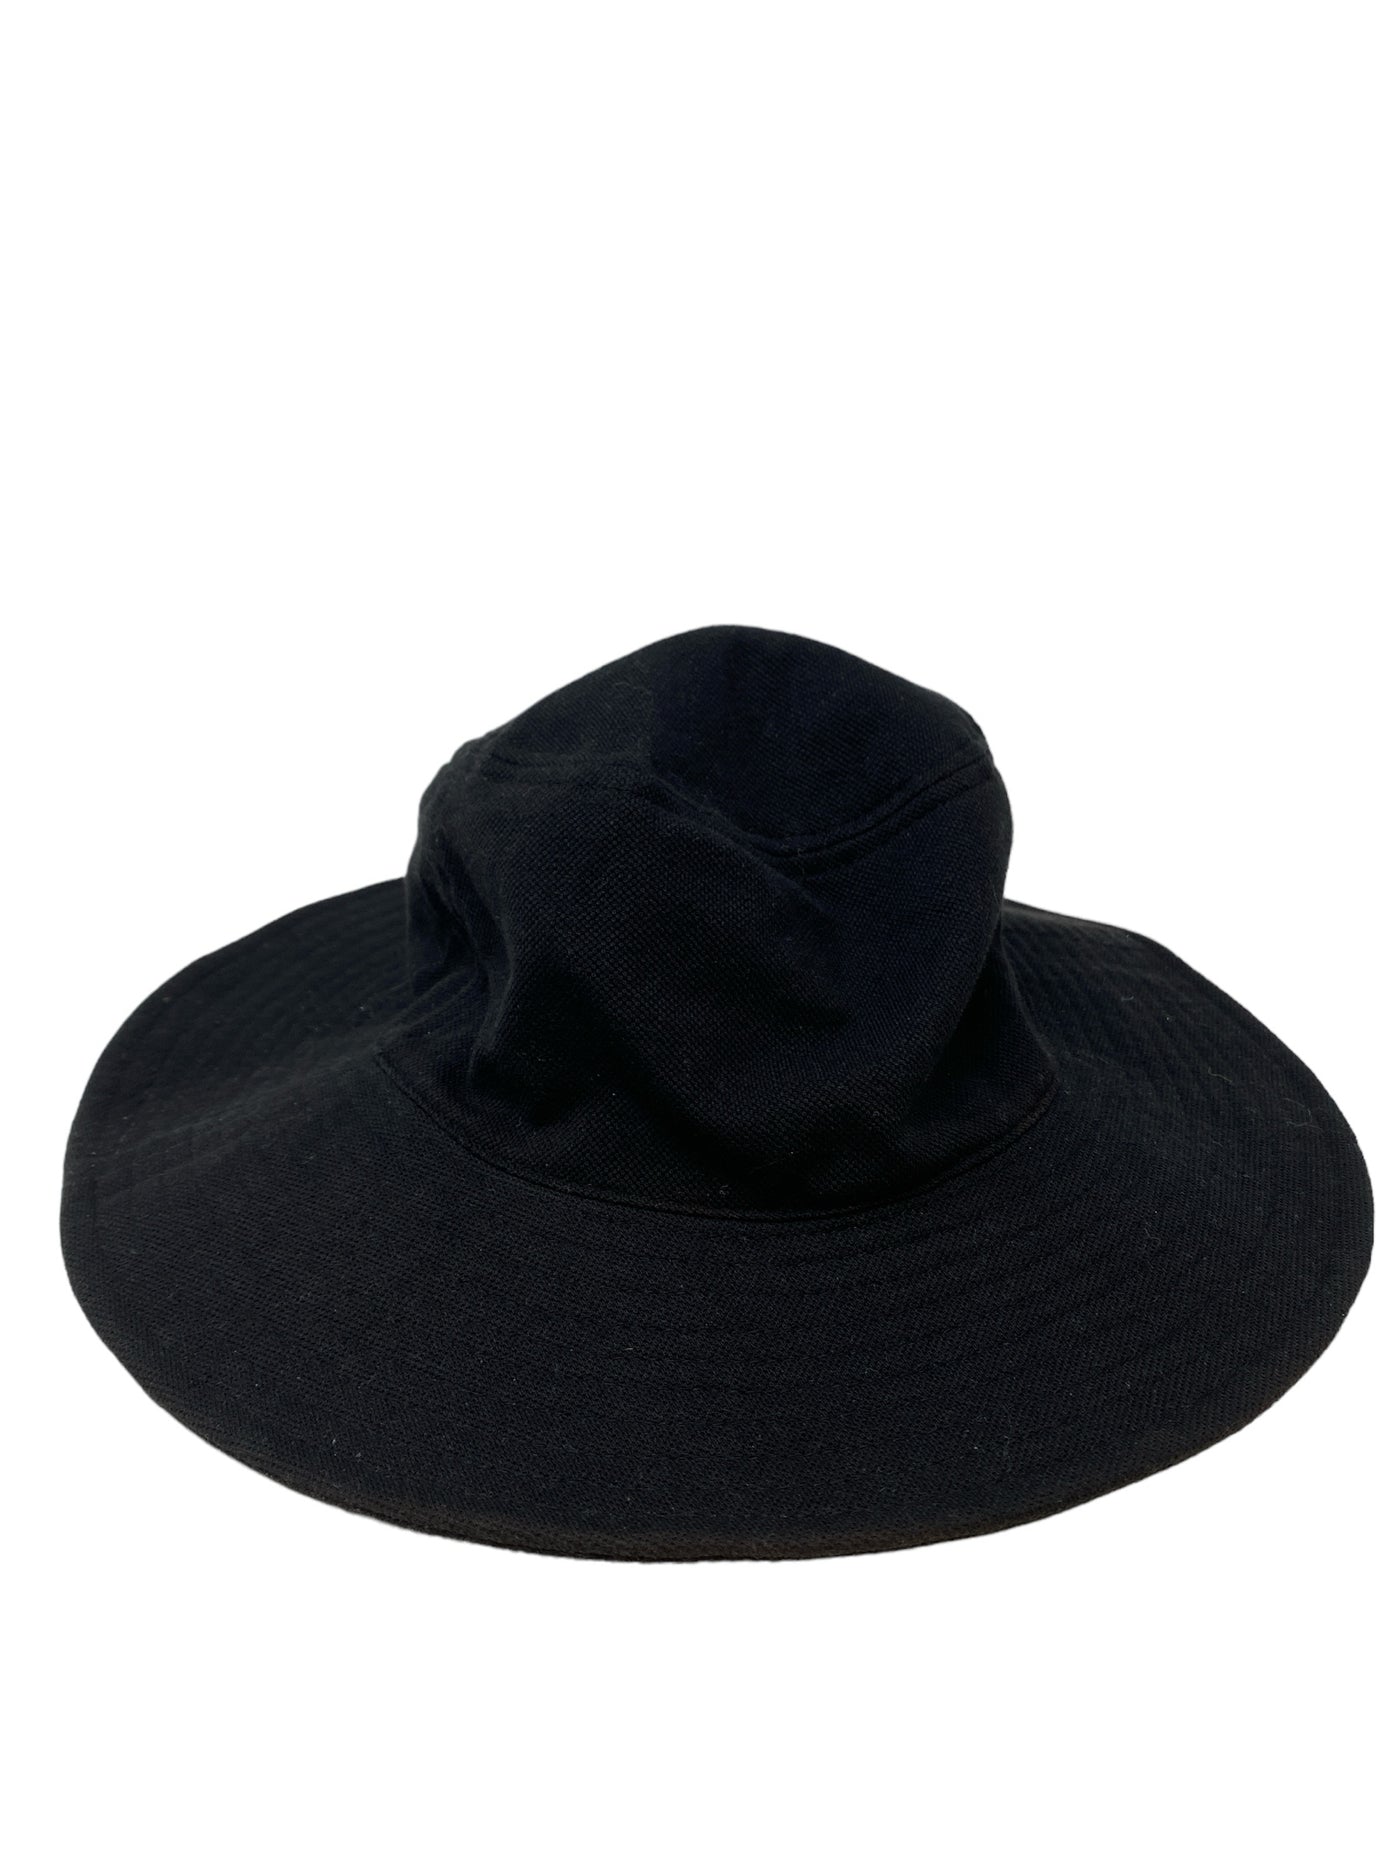 Talbots Black Hat